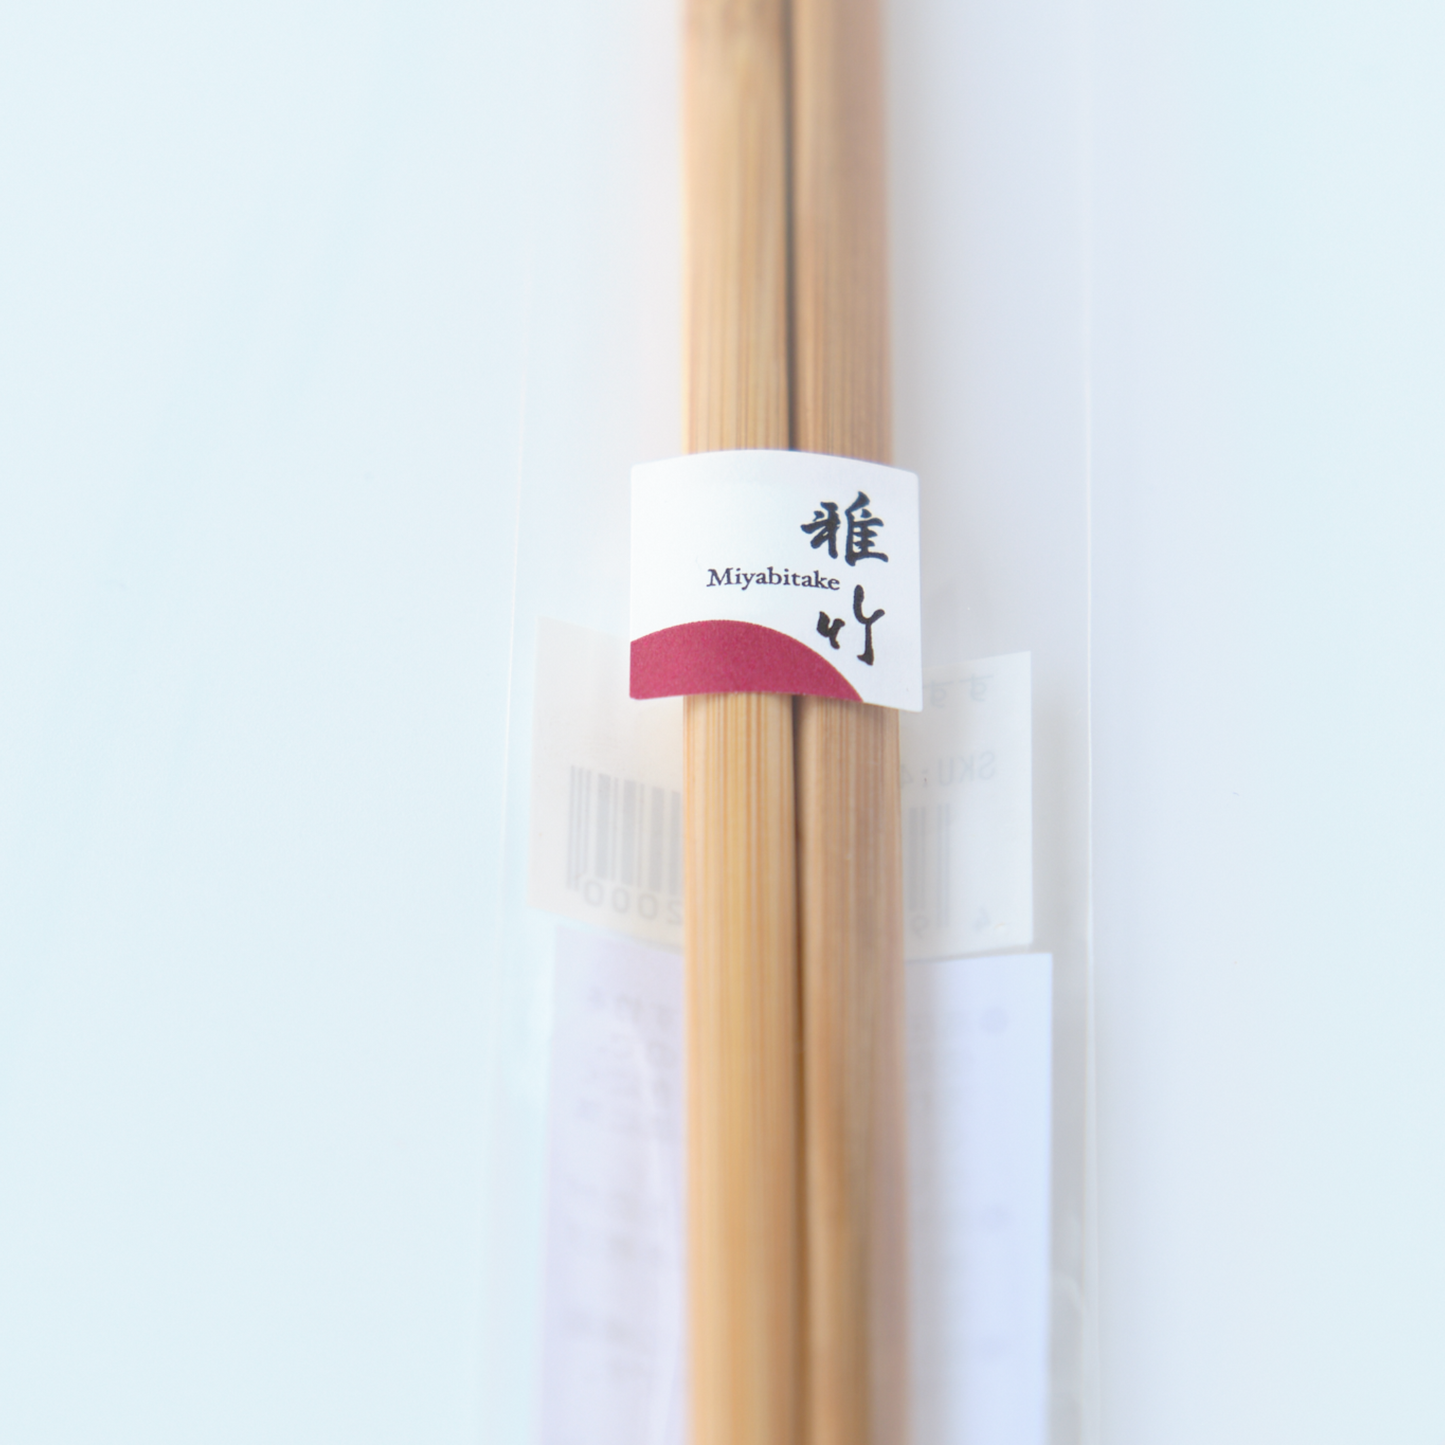 Triangular Bamboo Cooking Chopsticks